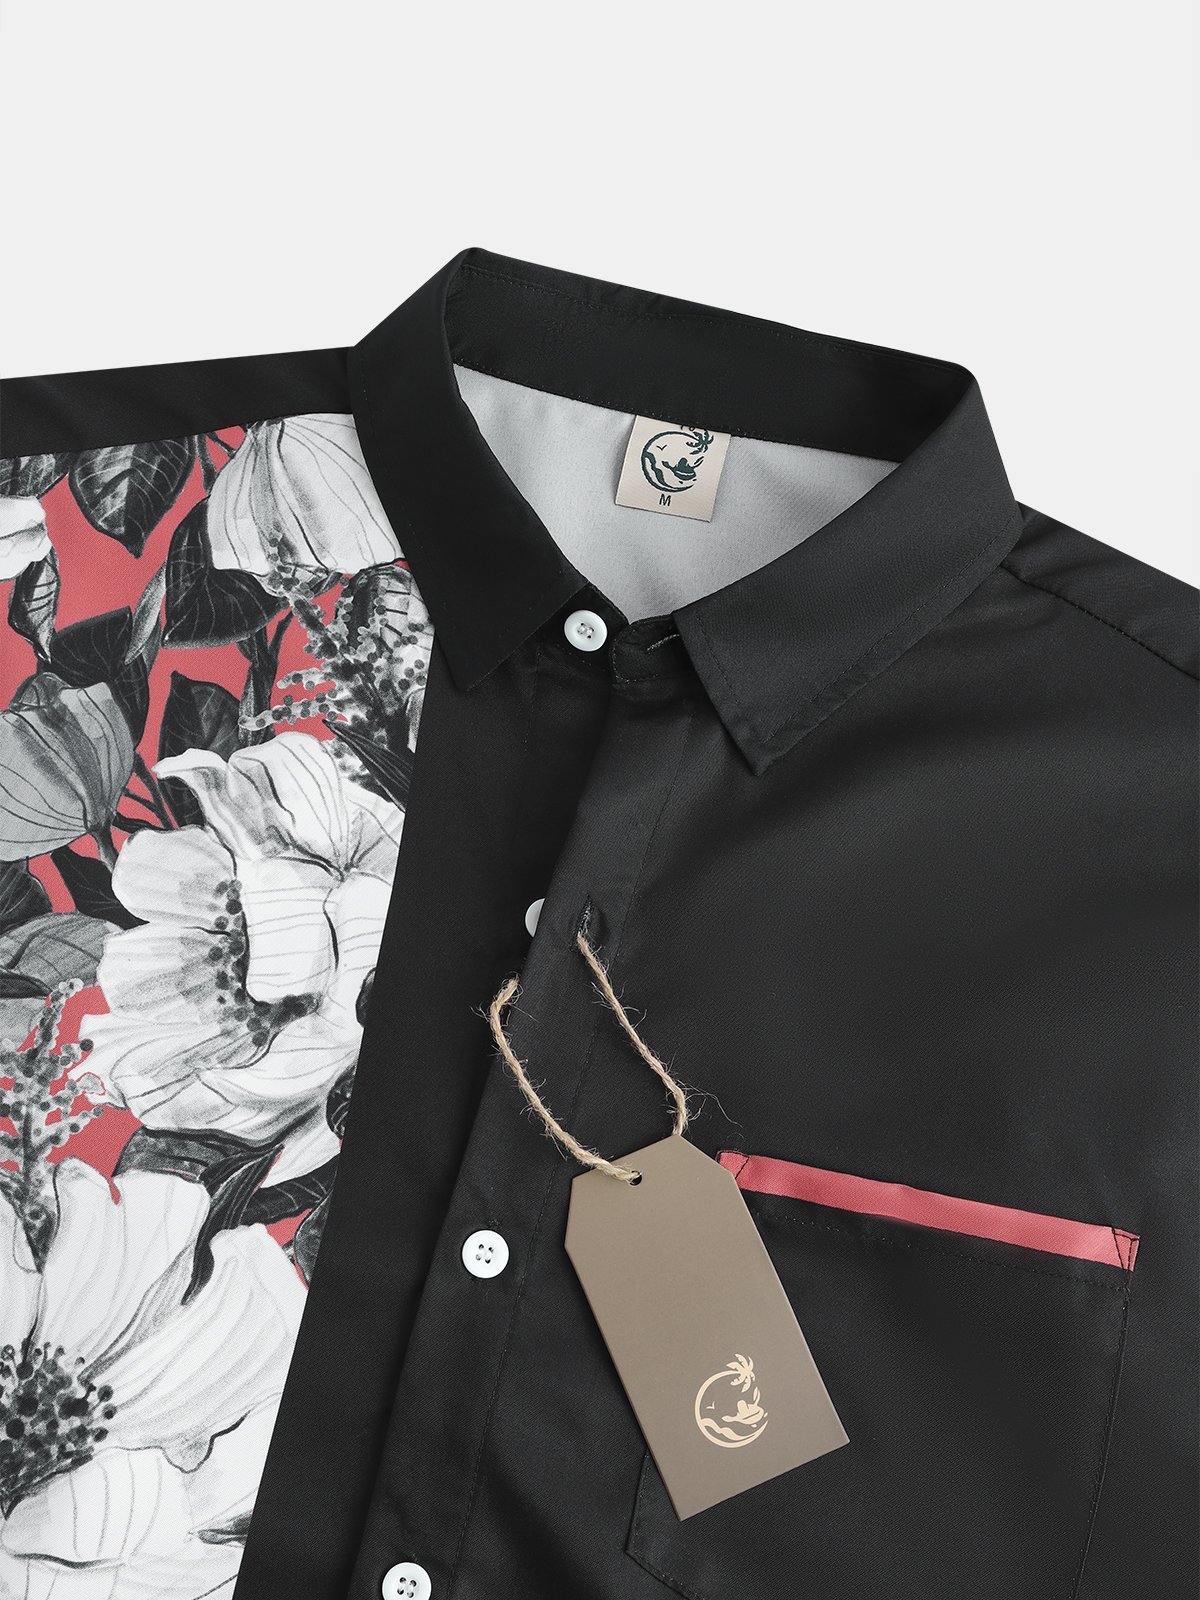 Men's Floral Print Short Sleeve Shirt